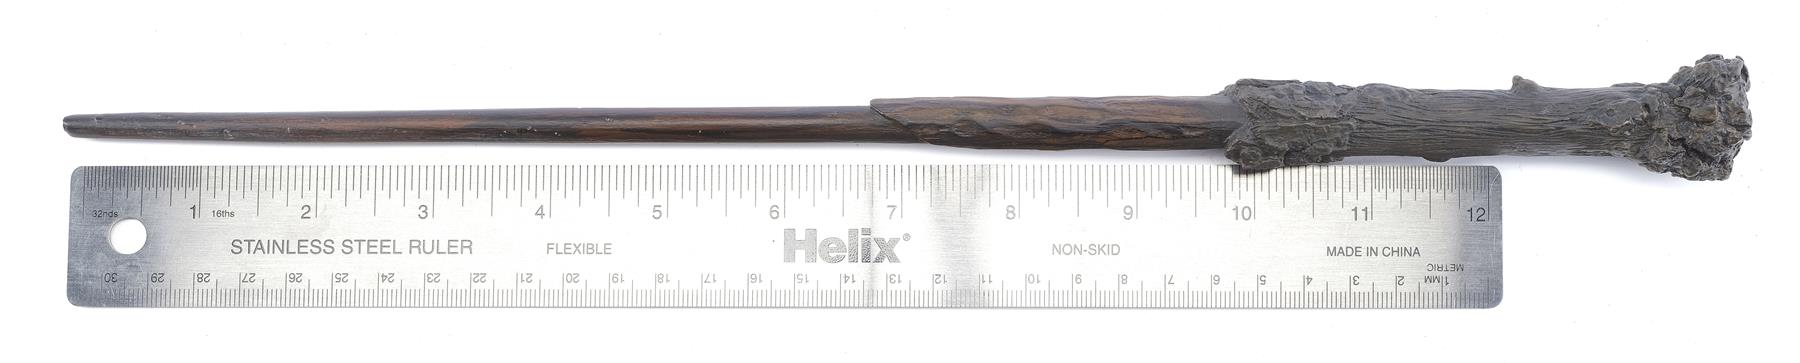 Harry Potter's wand, Prop Store auction